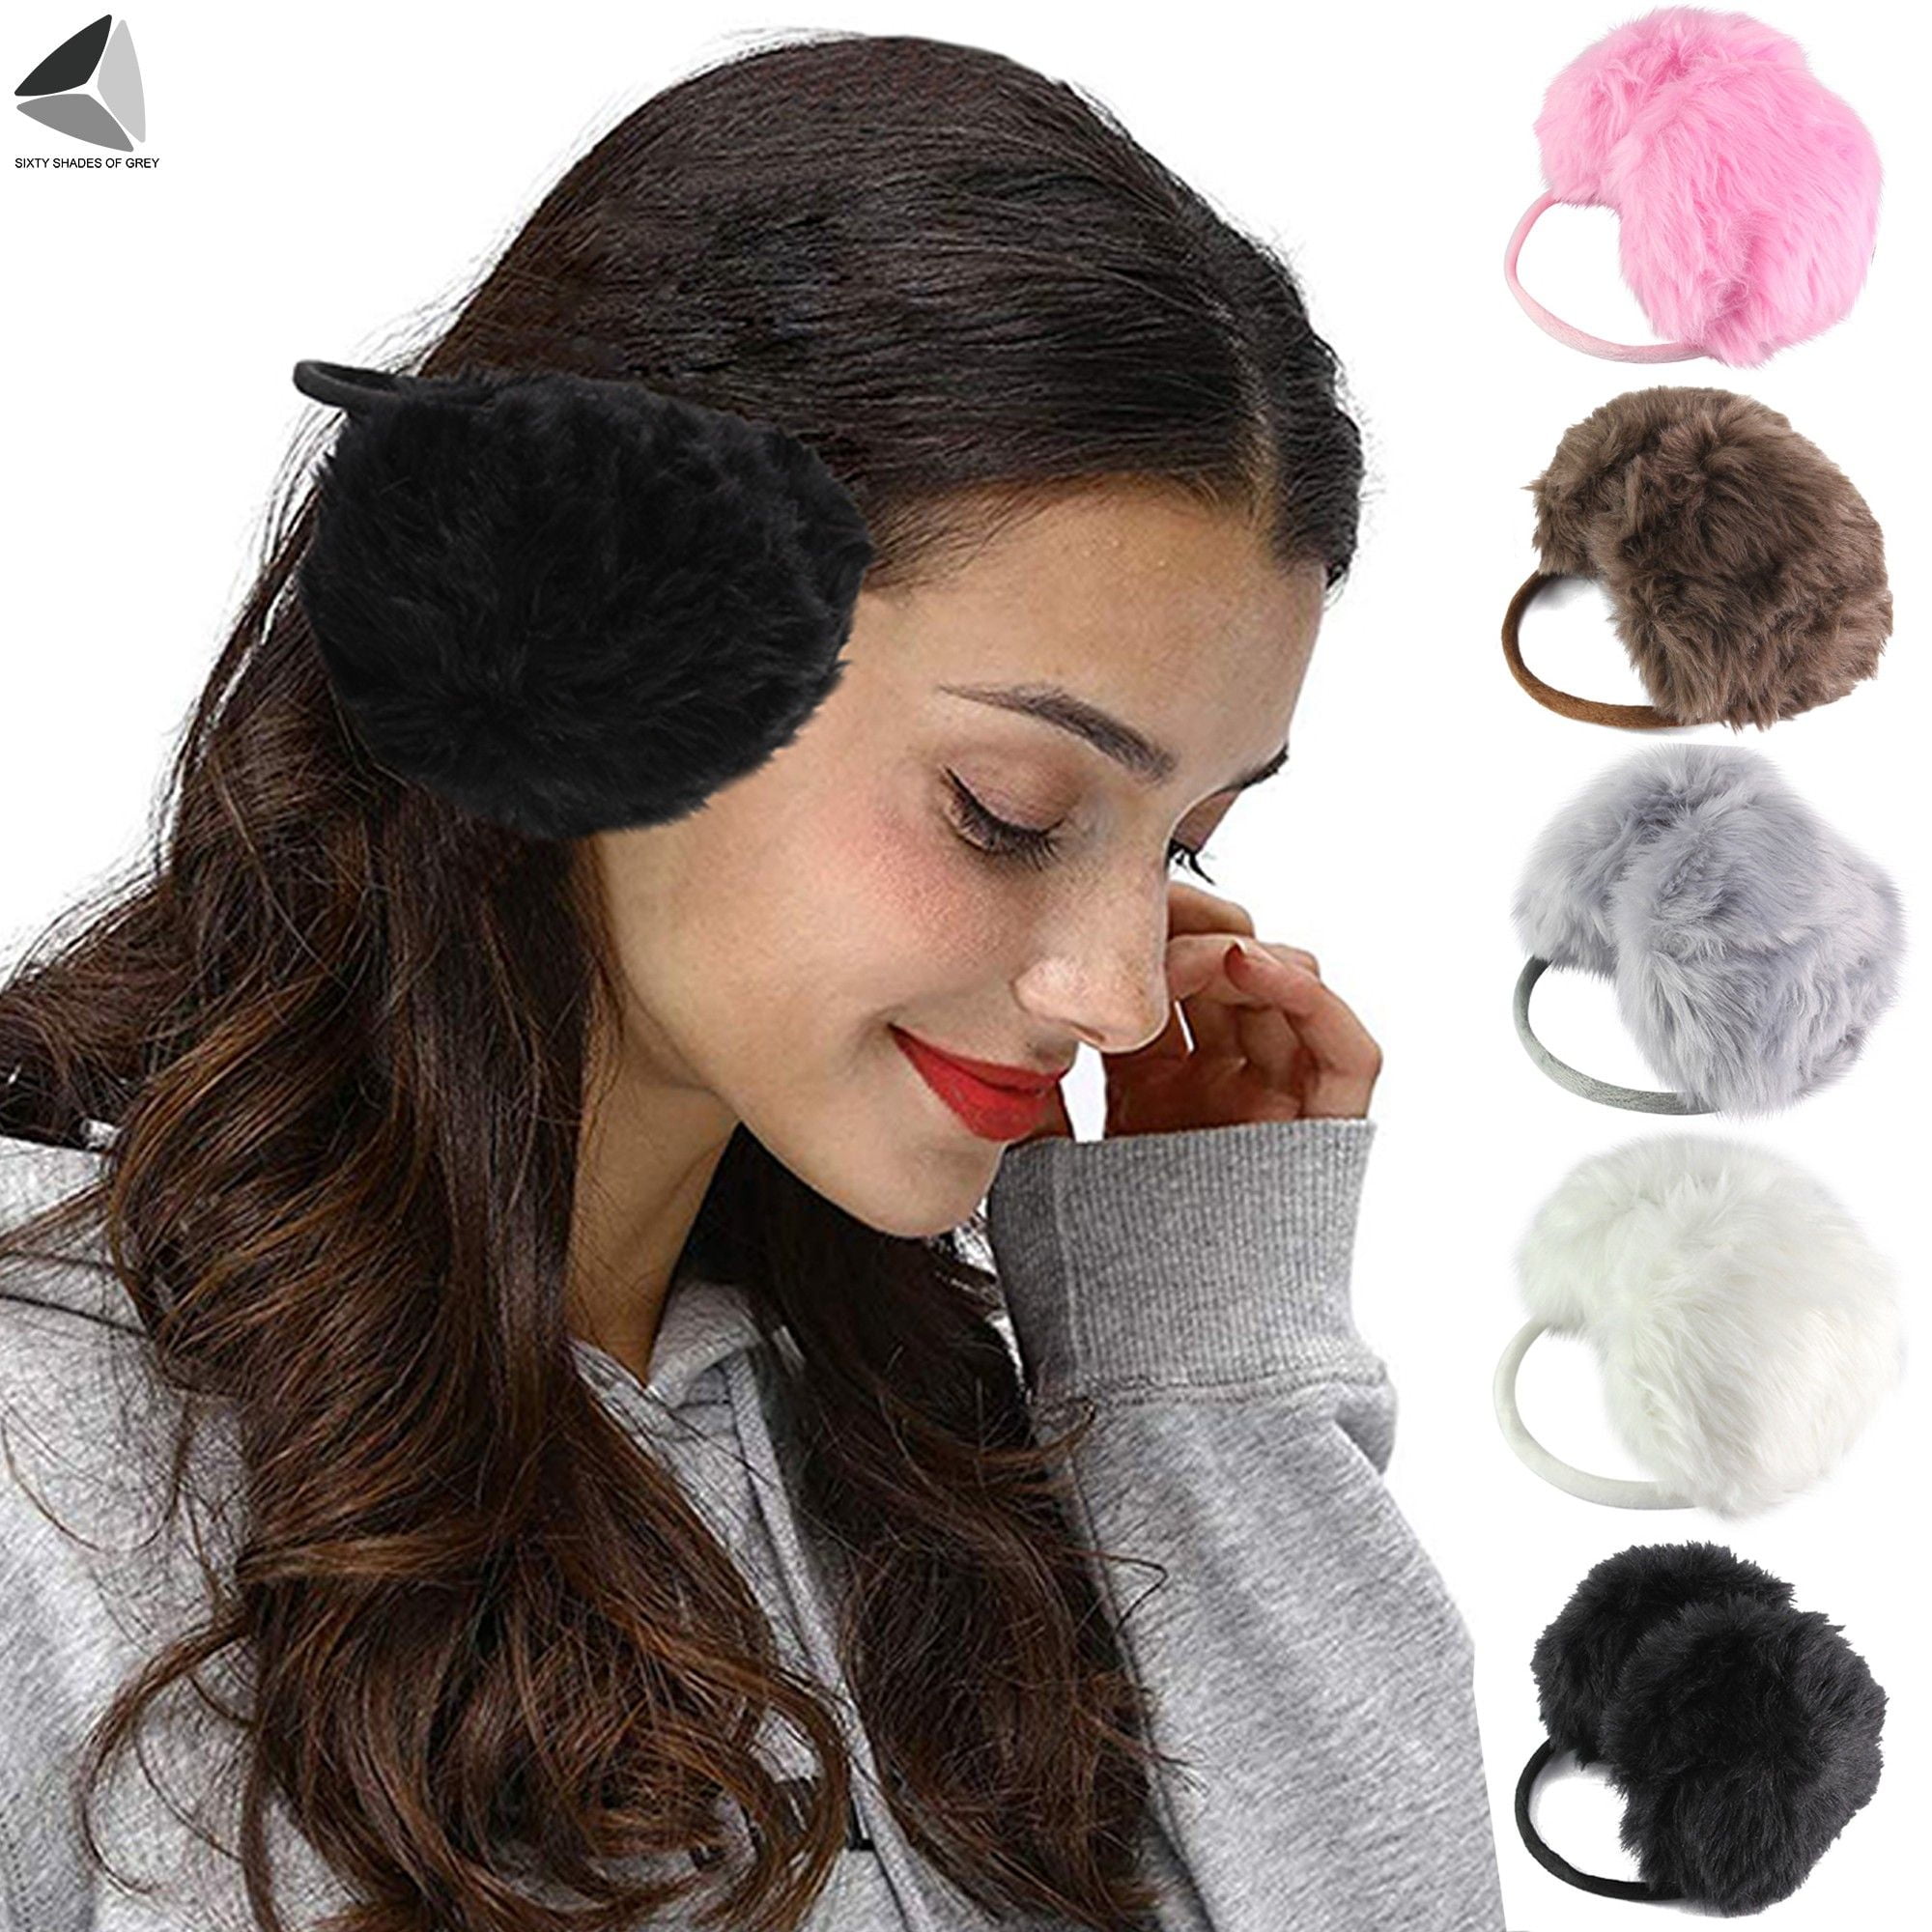 Winter Warm Ear Muffs Womens Adjustable Plush Headband Earmuff Faux Fur Earmuffs Foldable Big Ear Warmers Christmas Winter Gifts for Girl and Women 